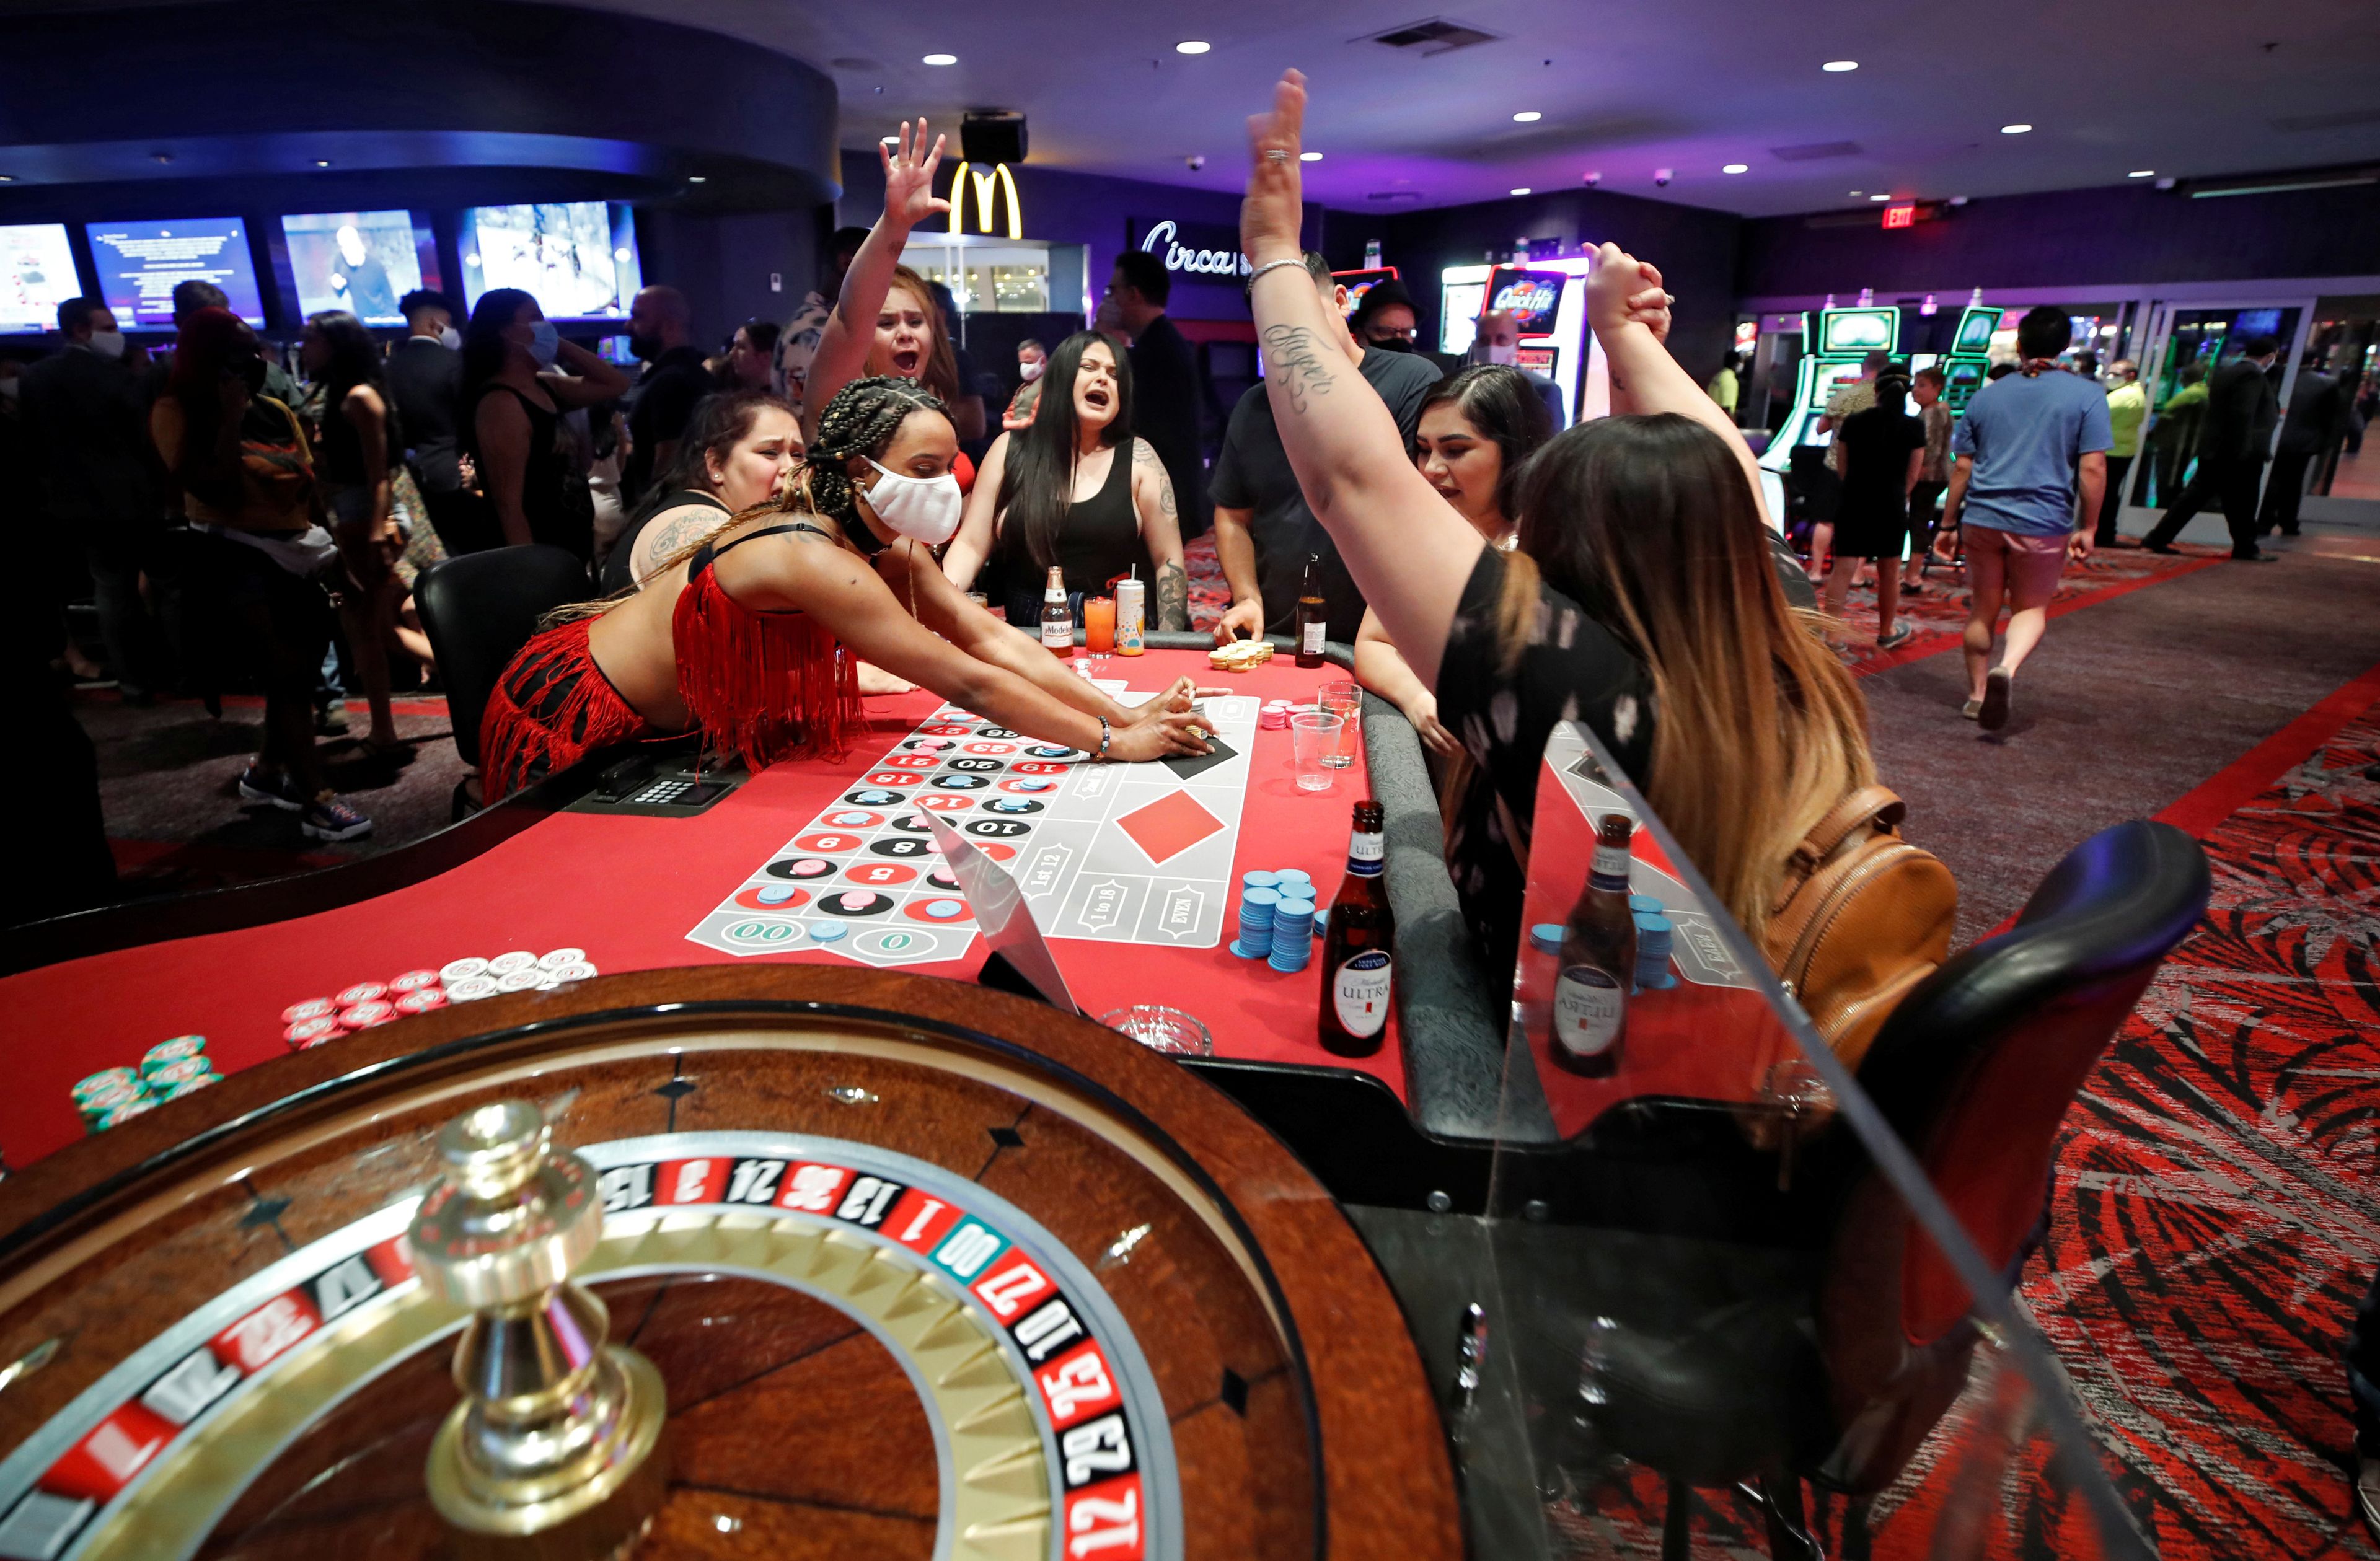 Un casino de Las Vegas reabierto durante la pandemia del coronavirus